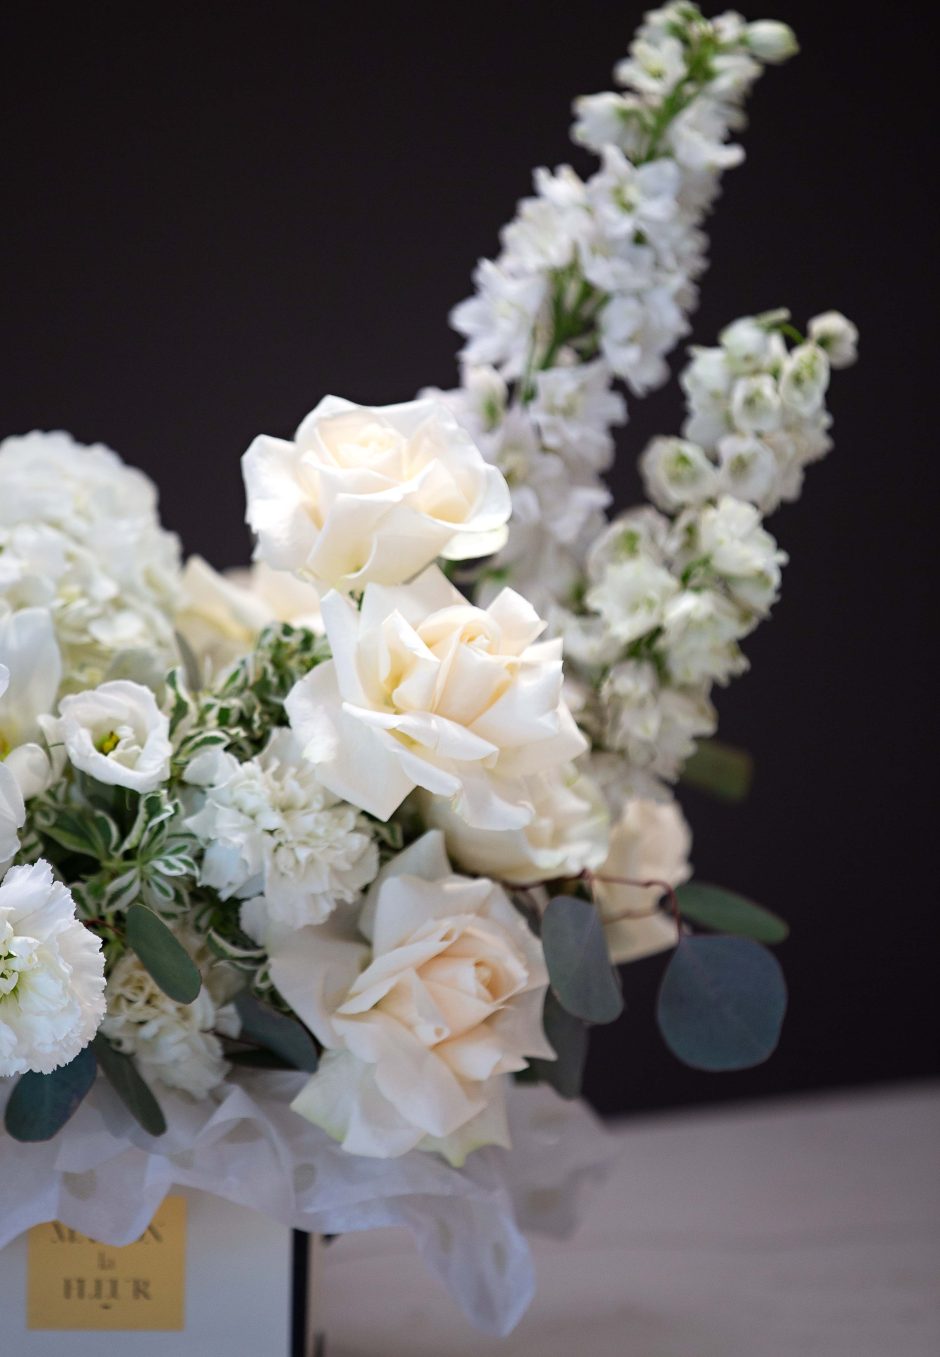 White Anemones Bouquet, Spring Awakening - Garden roses, anemones, lilac, long stem premium roses and eucalyptus